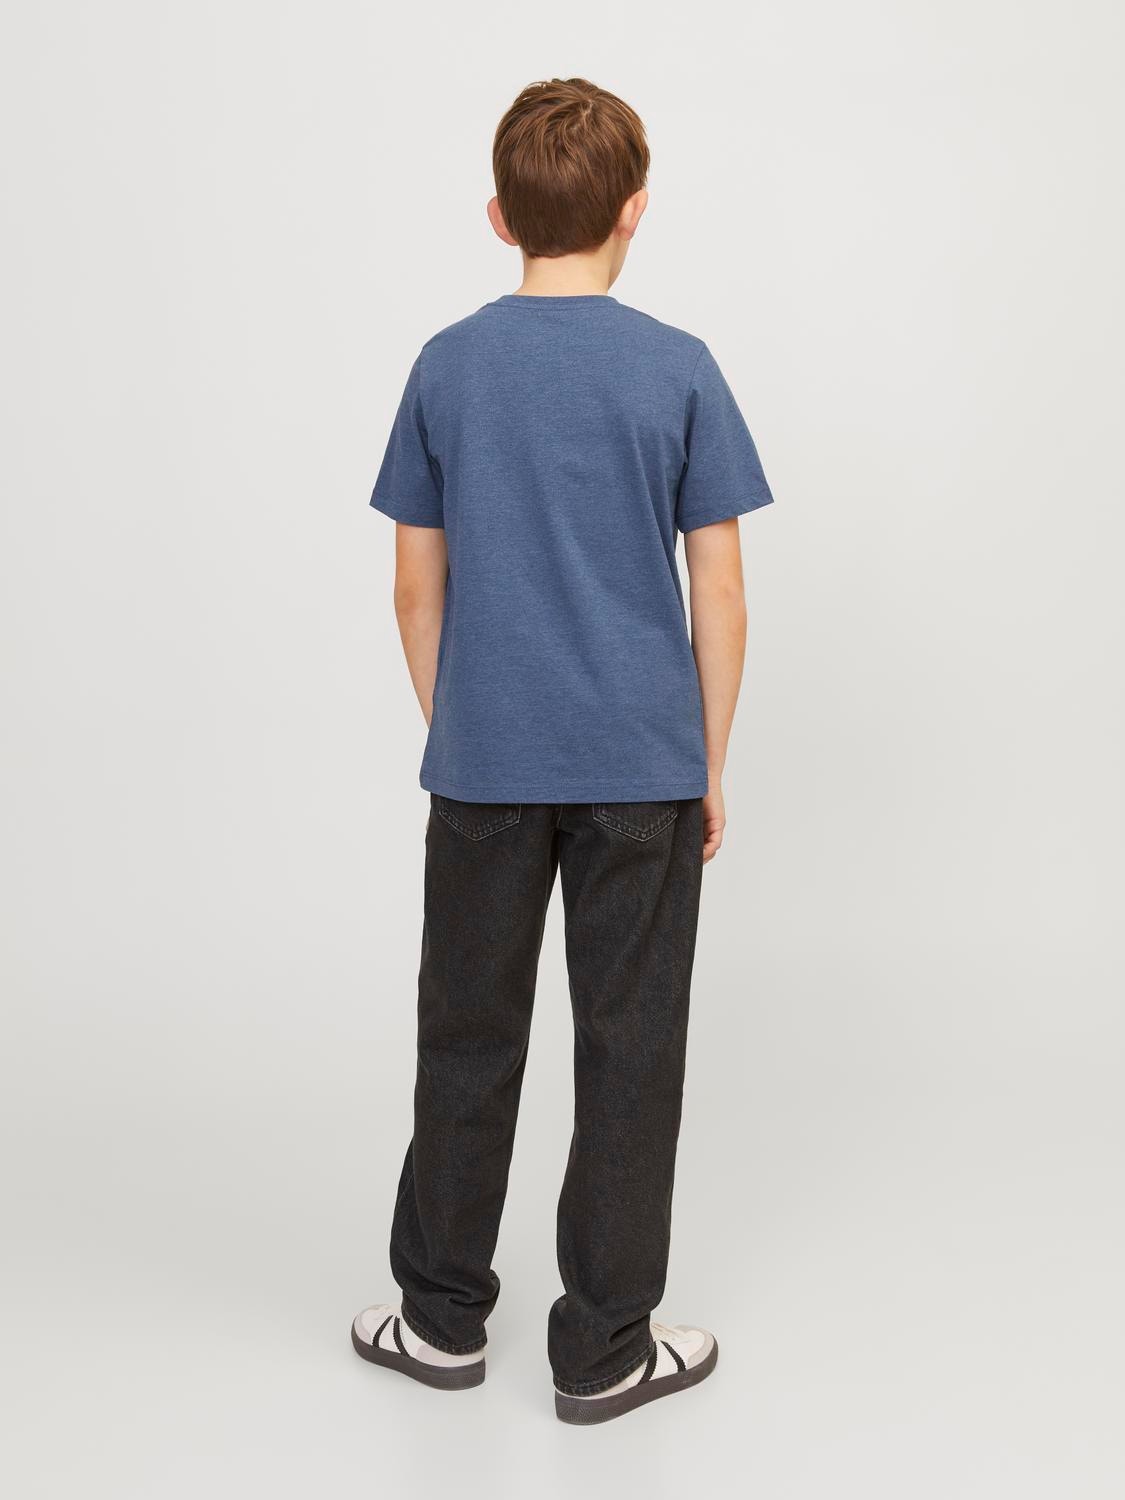 Jack & Jones Printed T-shirt For boys -Ensign Blue - 12237367